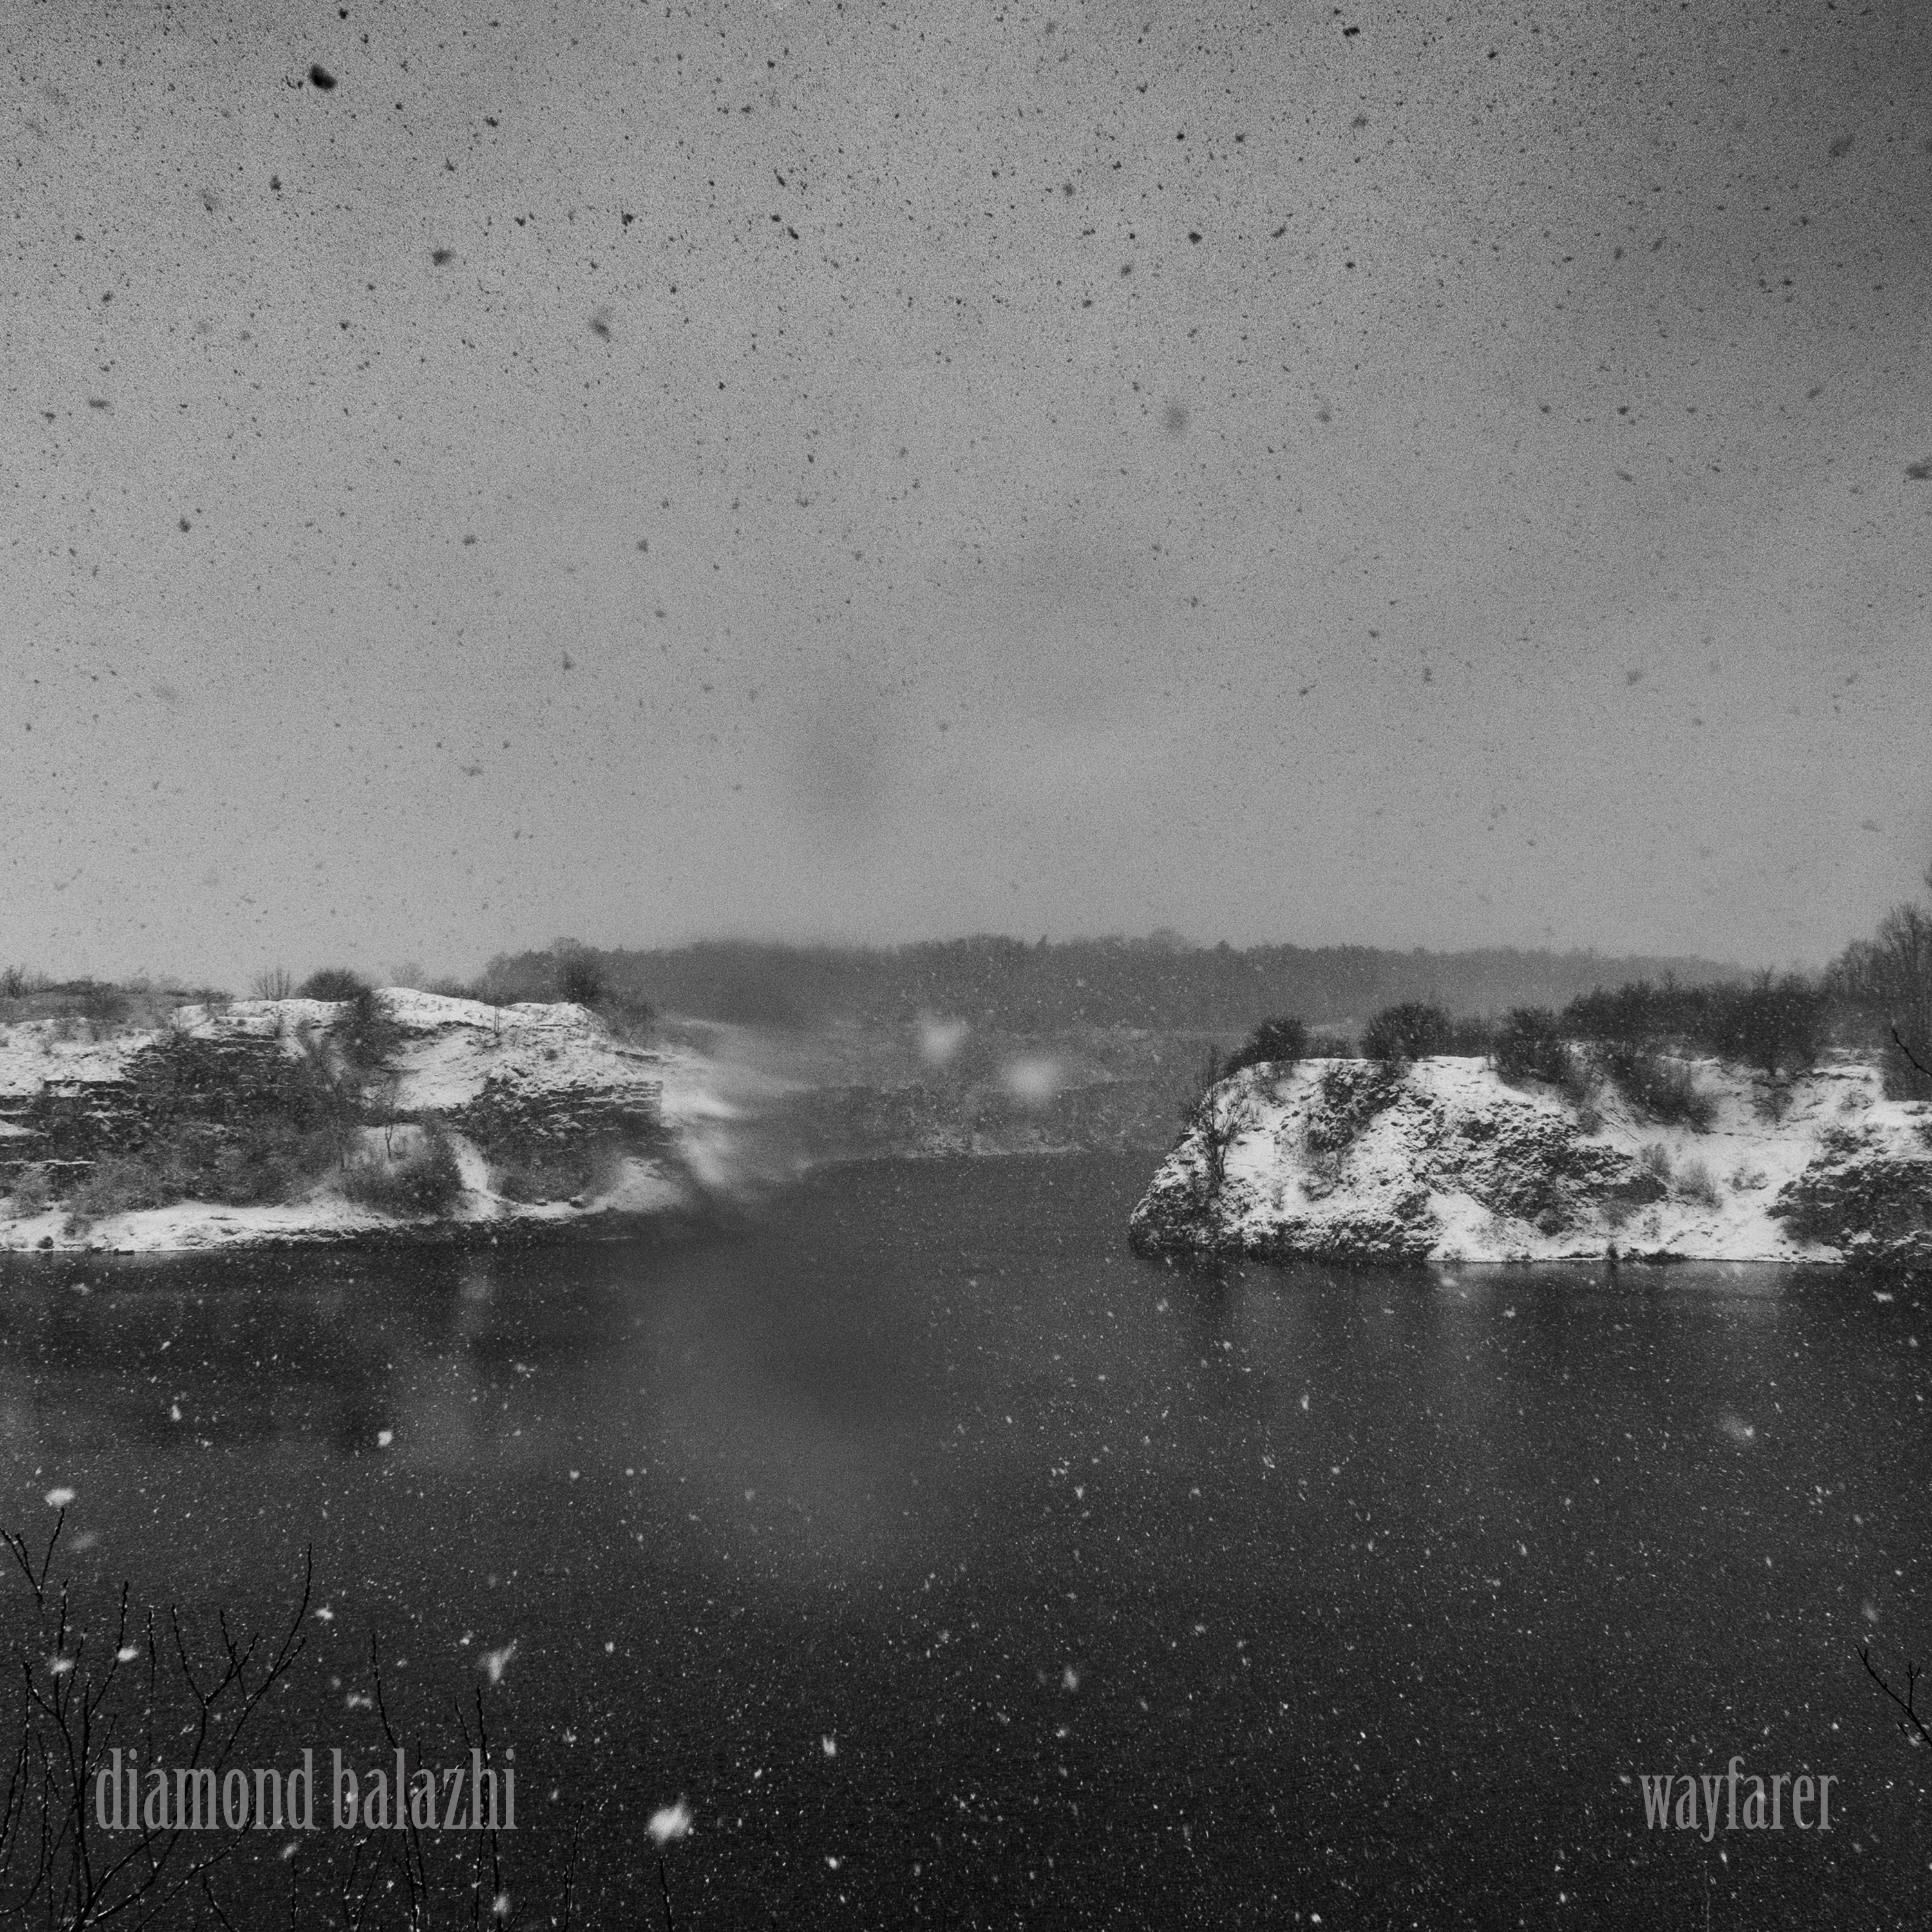 Diamond Balazhi album cover with frozen lake and snowy lake shore